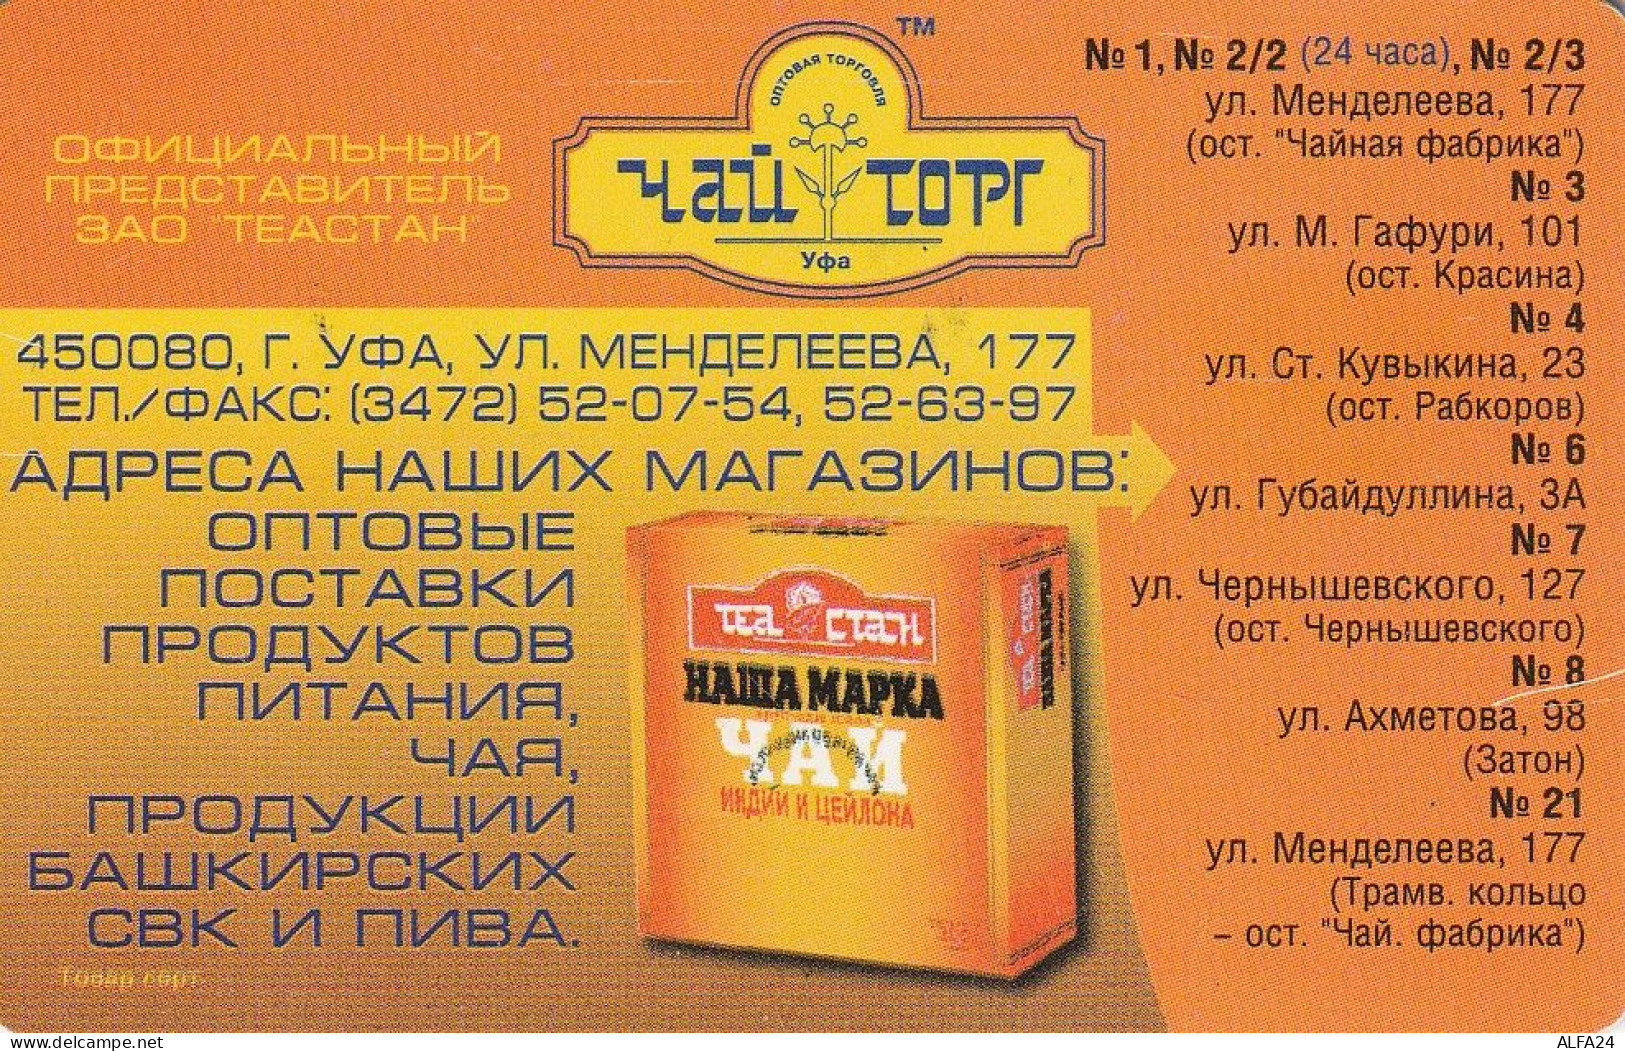 PHONE CARD RUSSIA Bashinformsvyaz - Ufa (E9.2.5 - Rusia